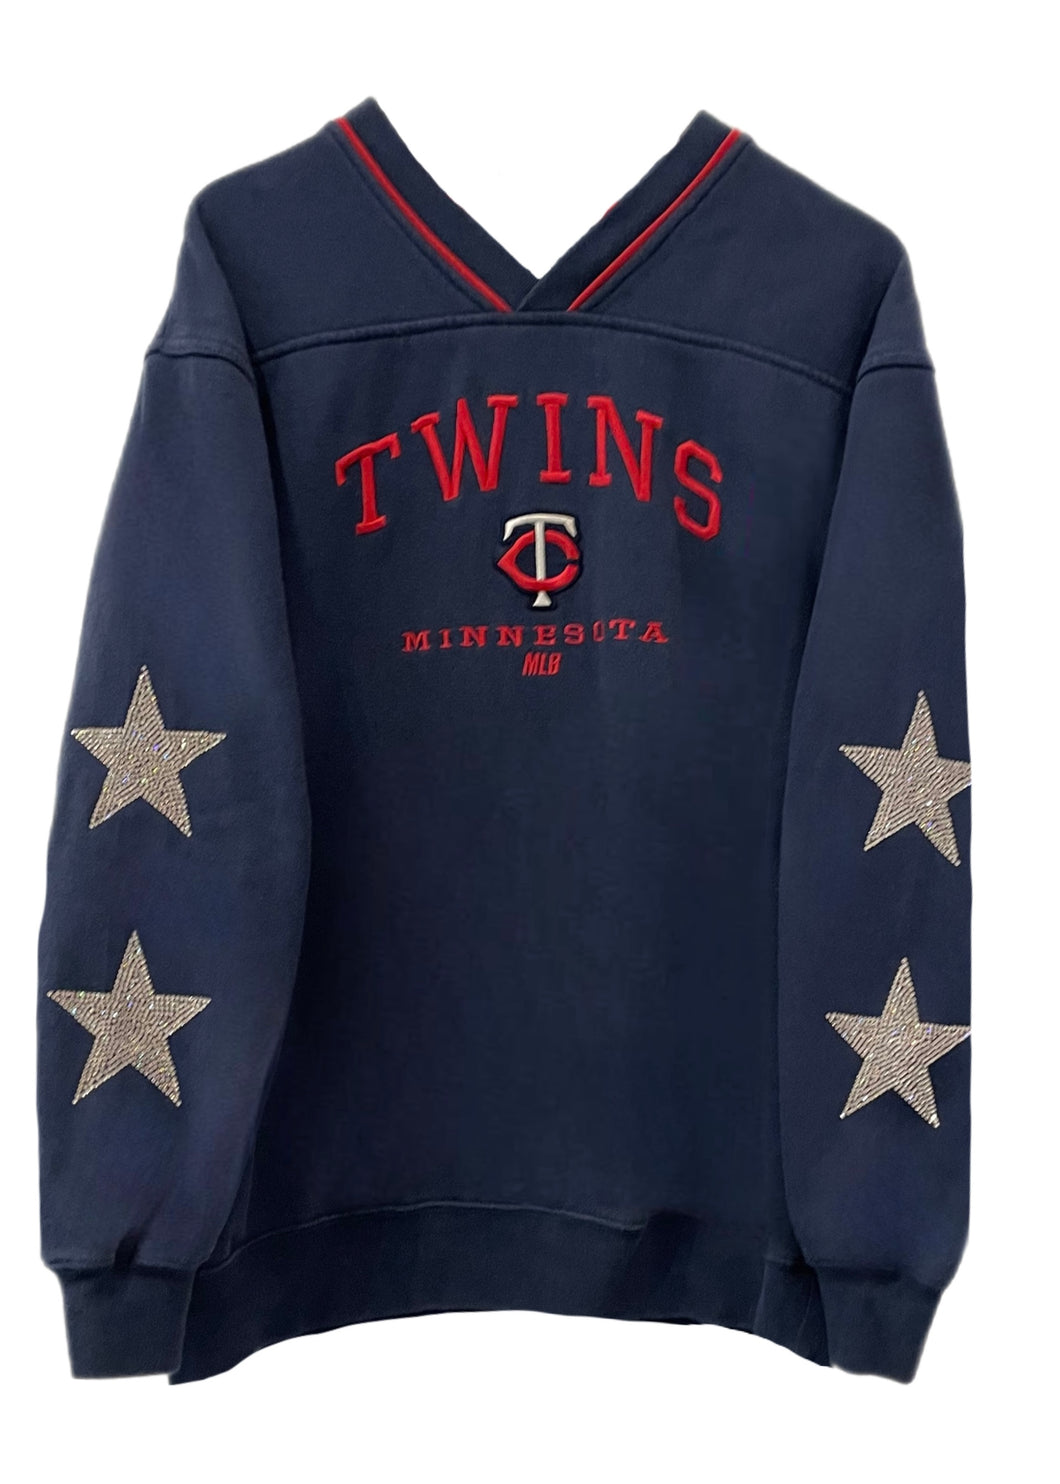 Minnesota Twins, MLB One of a KIND Vintage Sweatshirt with Crystal Star Design